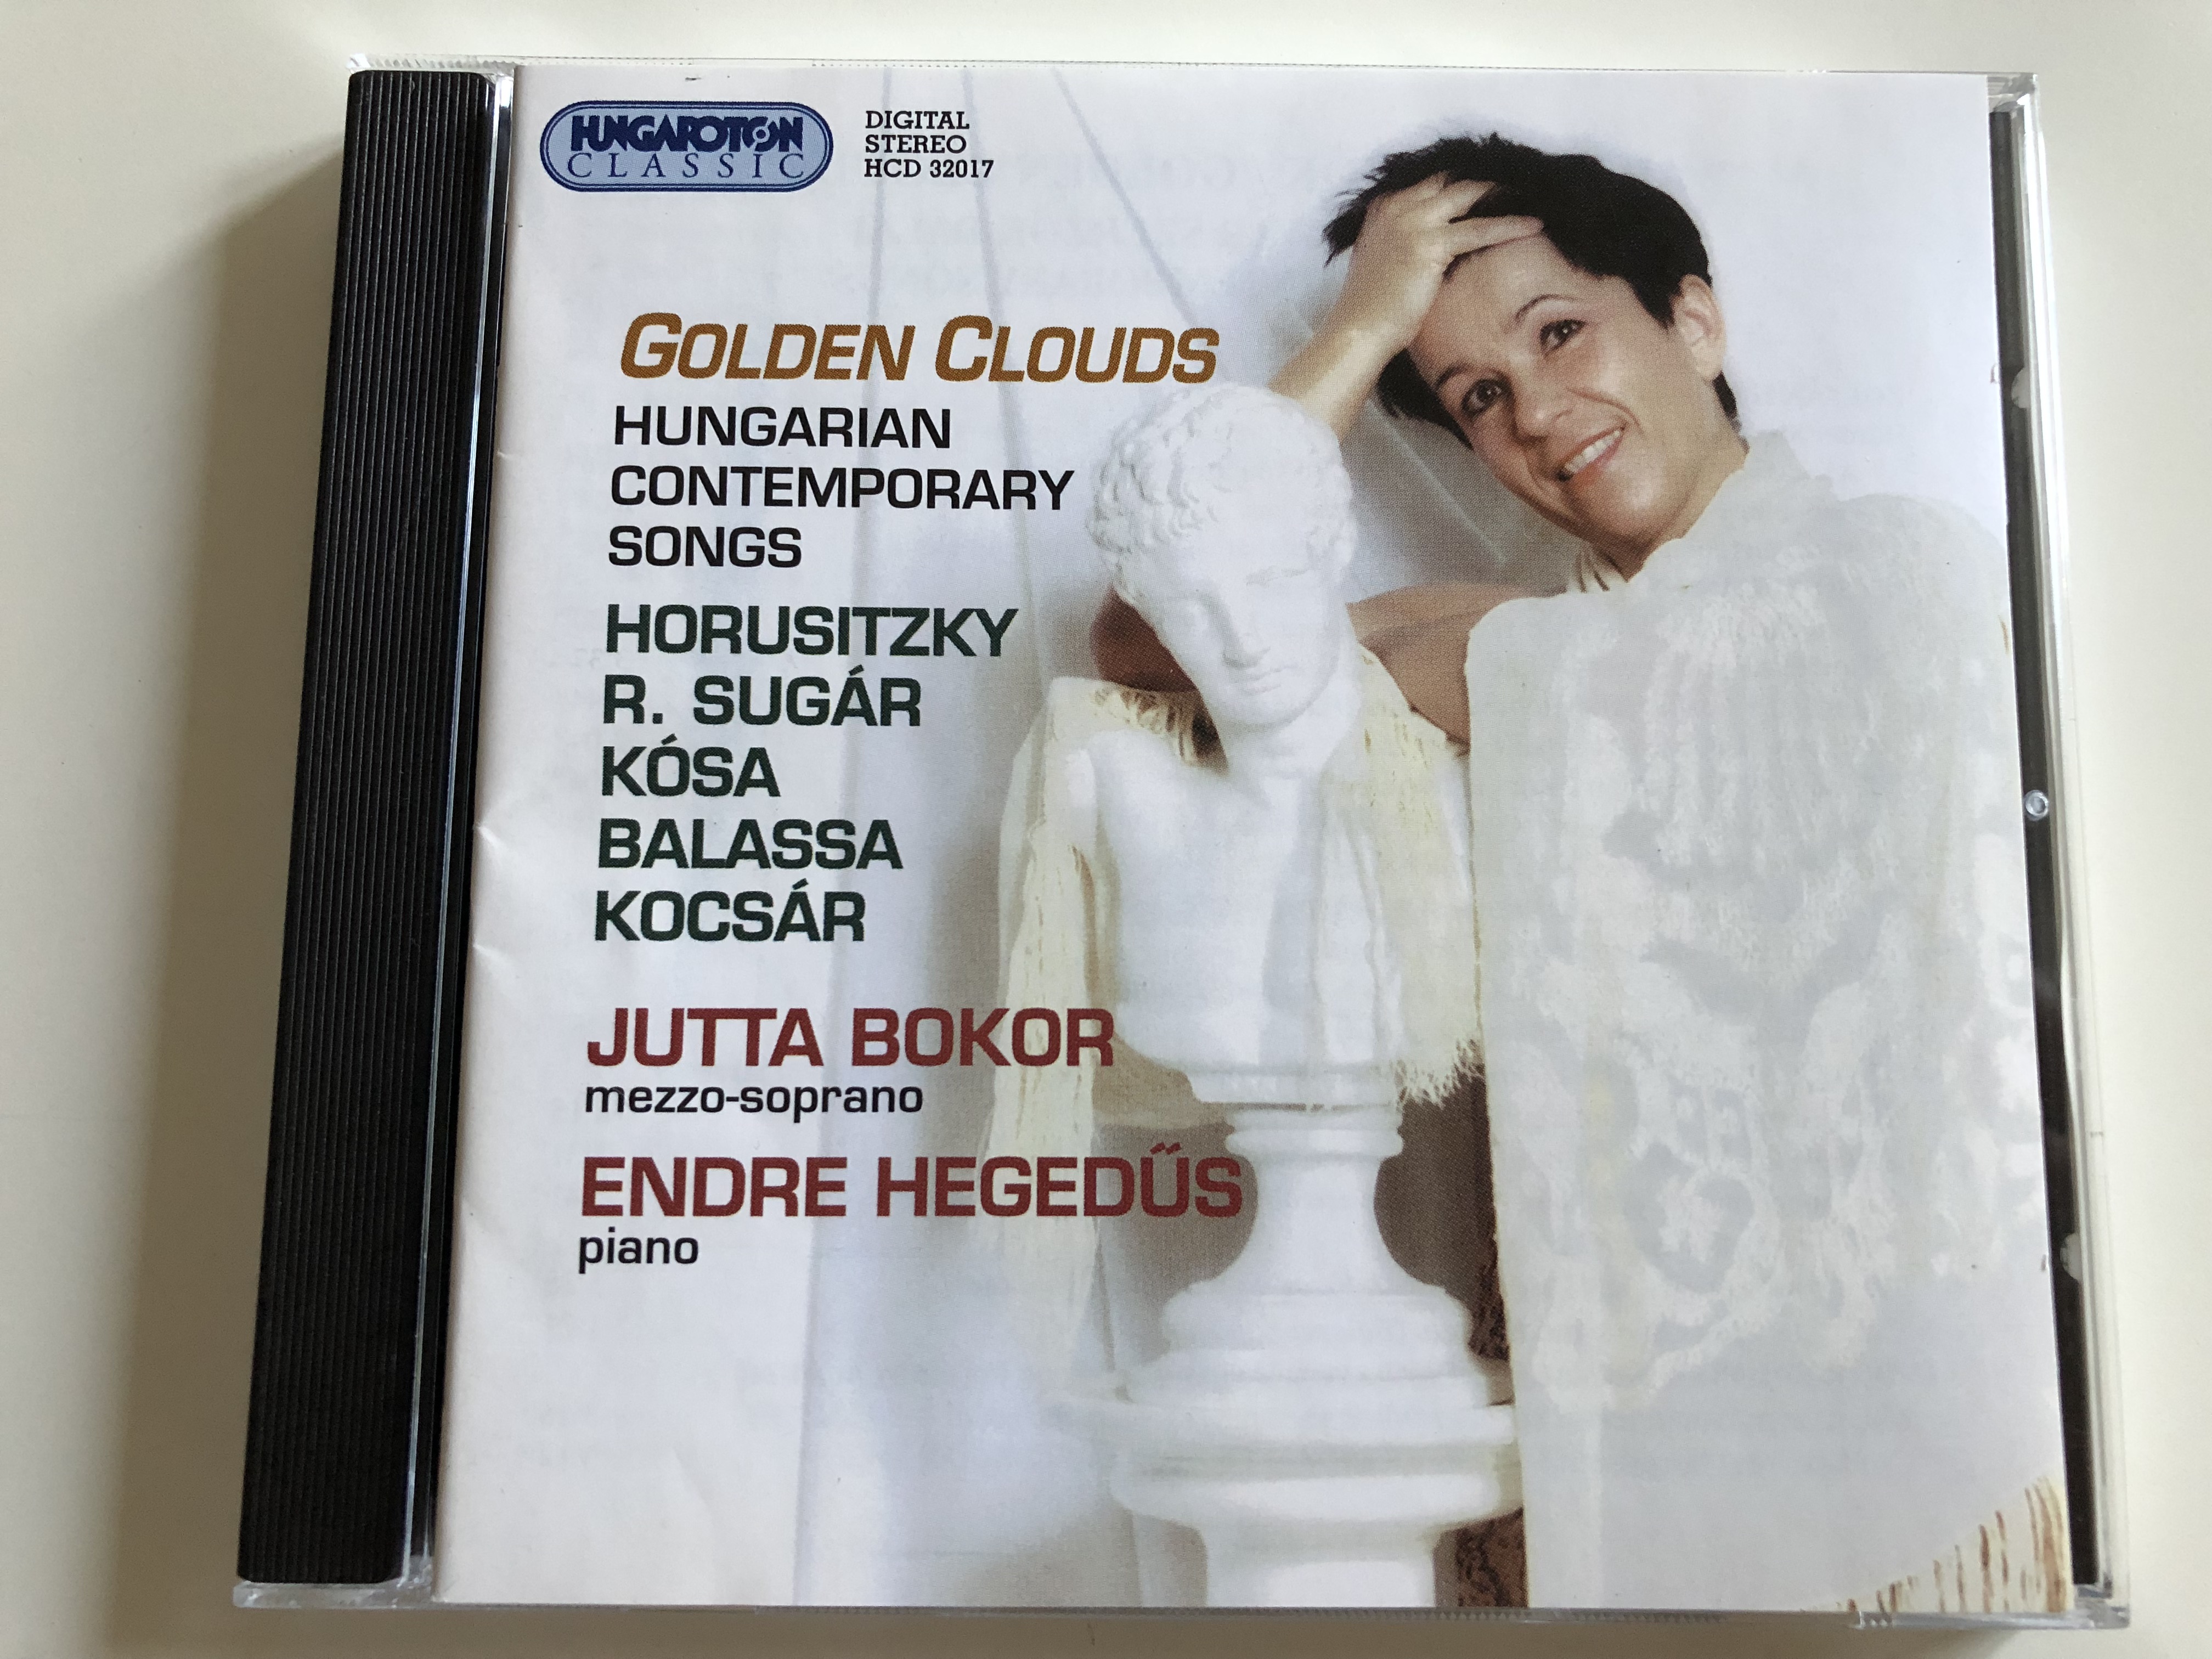 golden-clouds-hungarian-contemporary-songs-horusitzky-r.-sug-r-k-sa-balassa-kocs-r-jutta-bokor-mezzo-soprano-endre-heged-s-piano-hungaroton-classic-audio-cd-2000-hcd-32017-1-.jpg